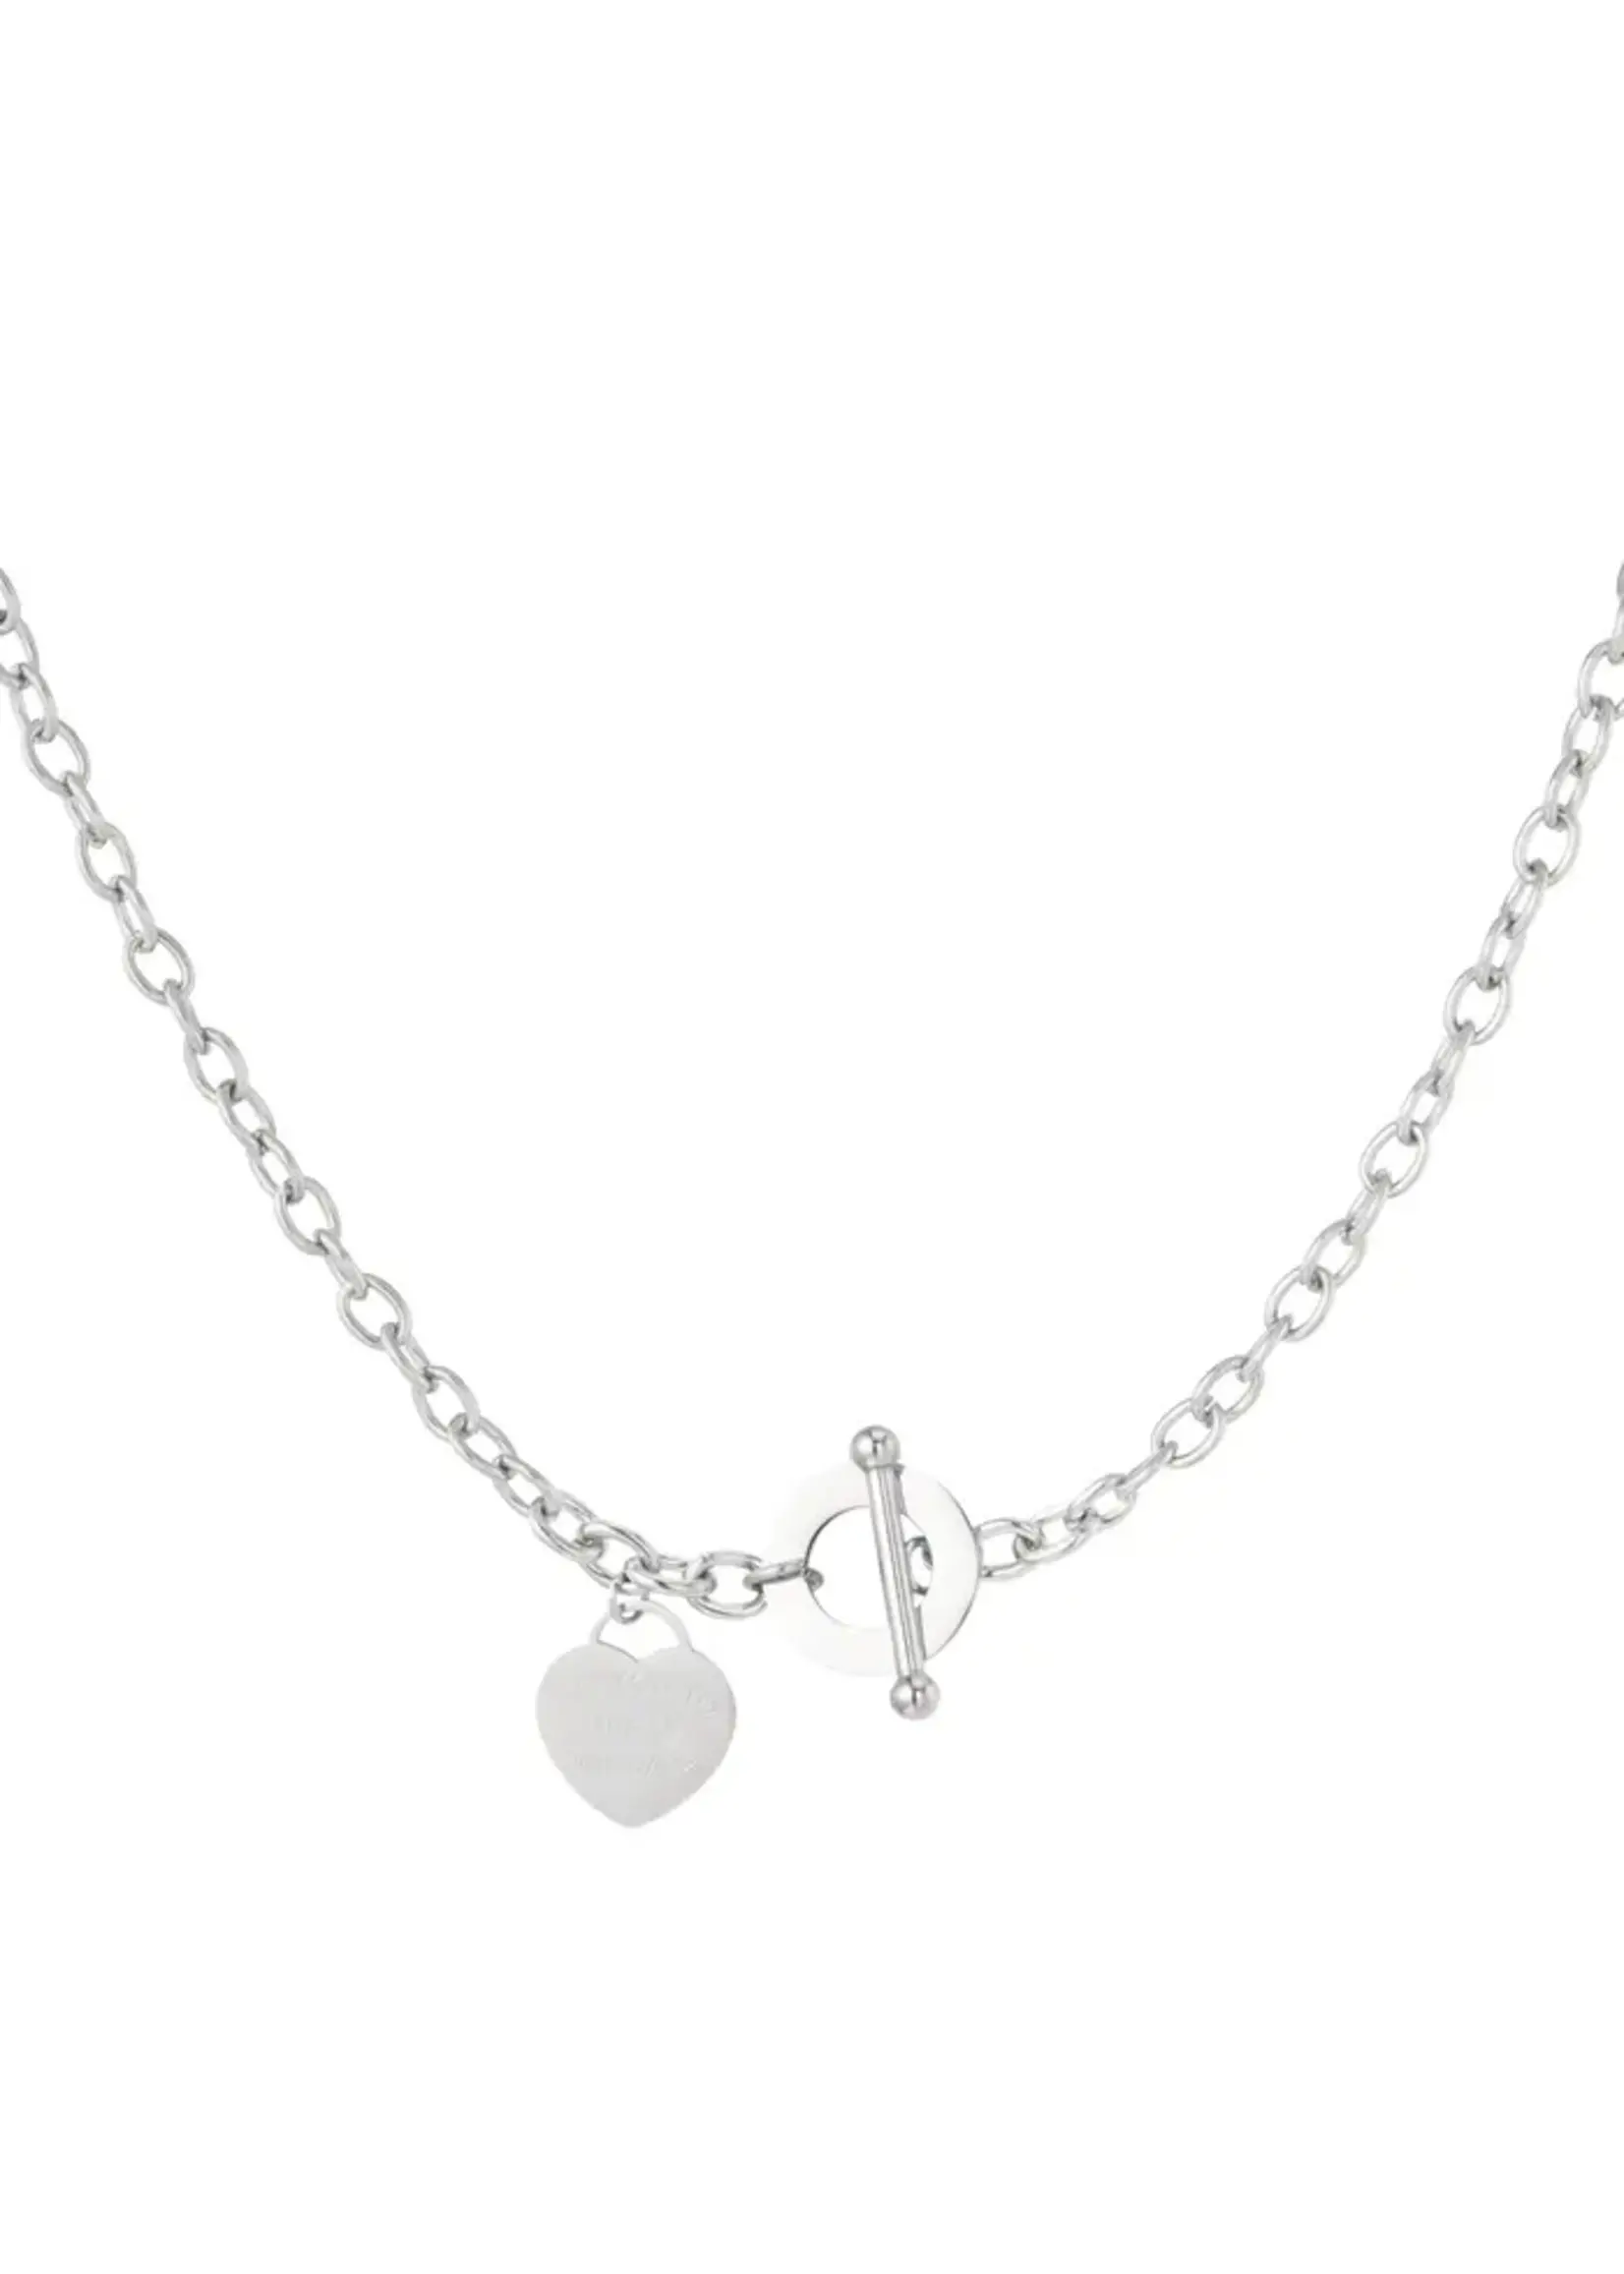 Chain Necklace Heart Round Lock Silver